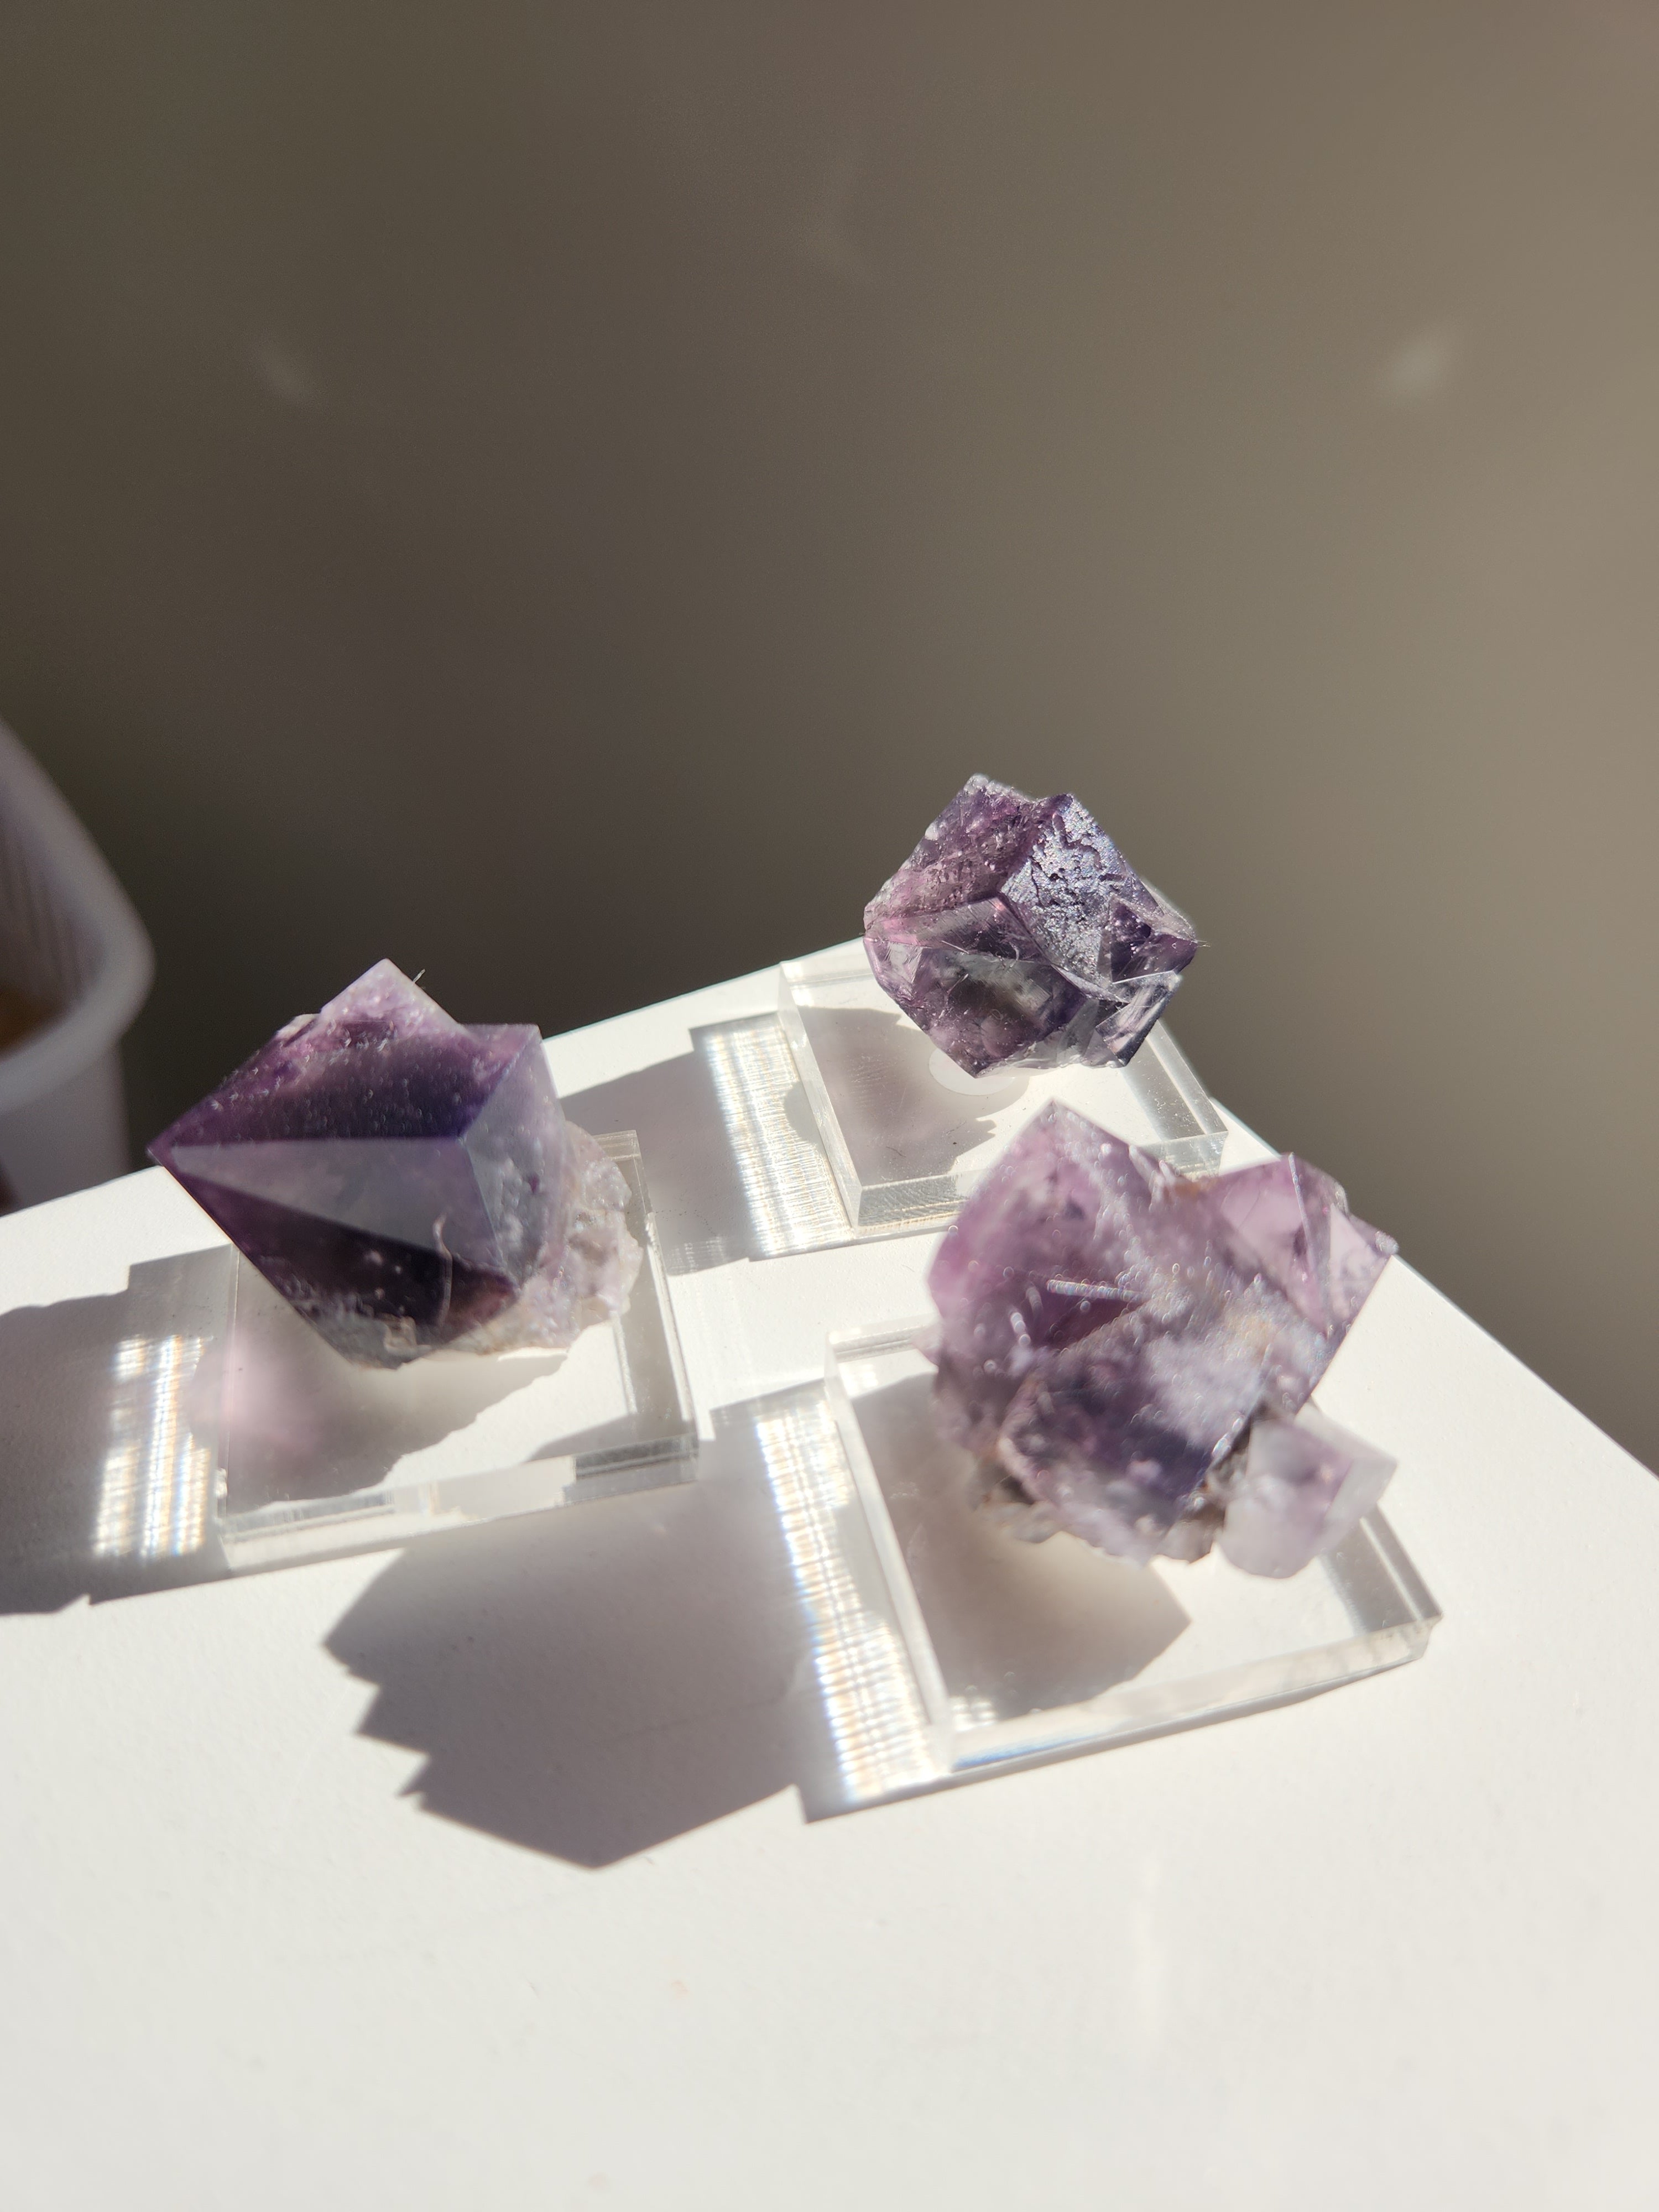 Purple Rain Fluorite Specimen | Intuitively Chosen